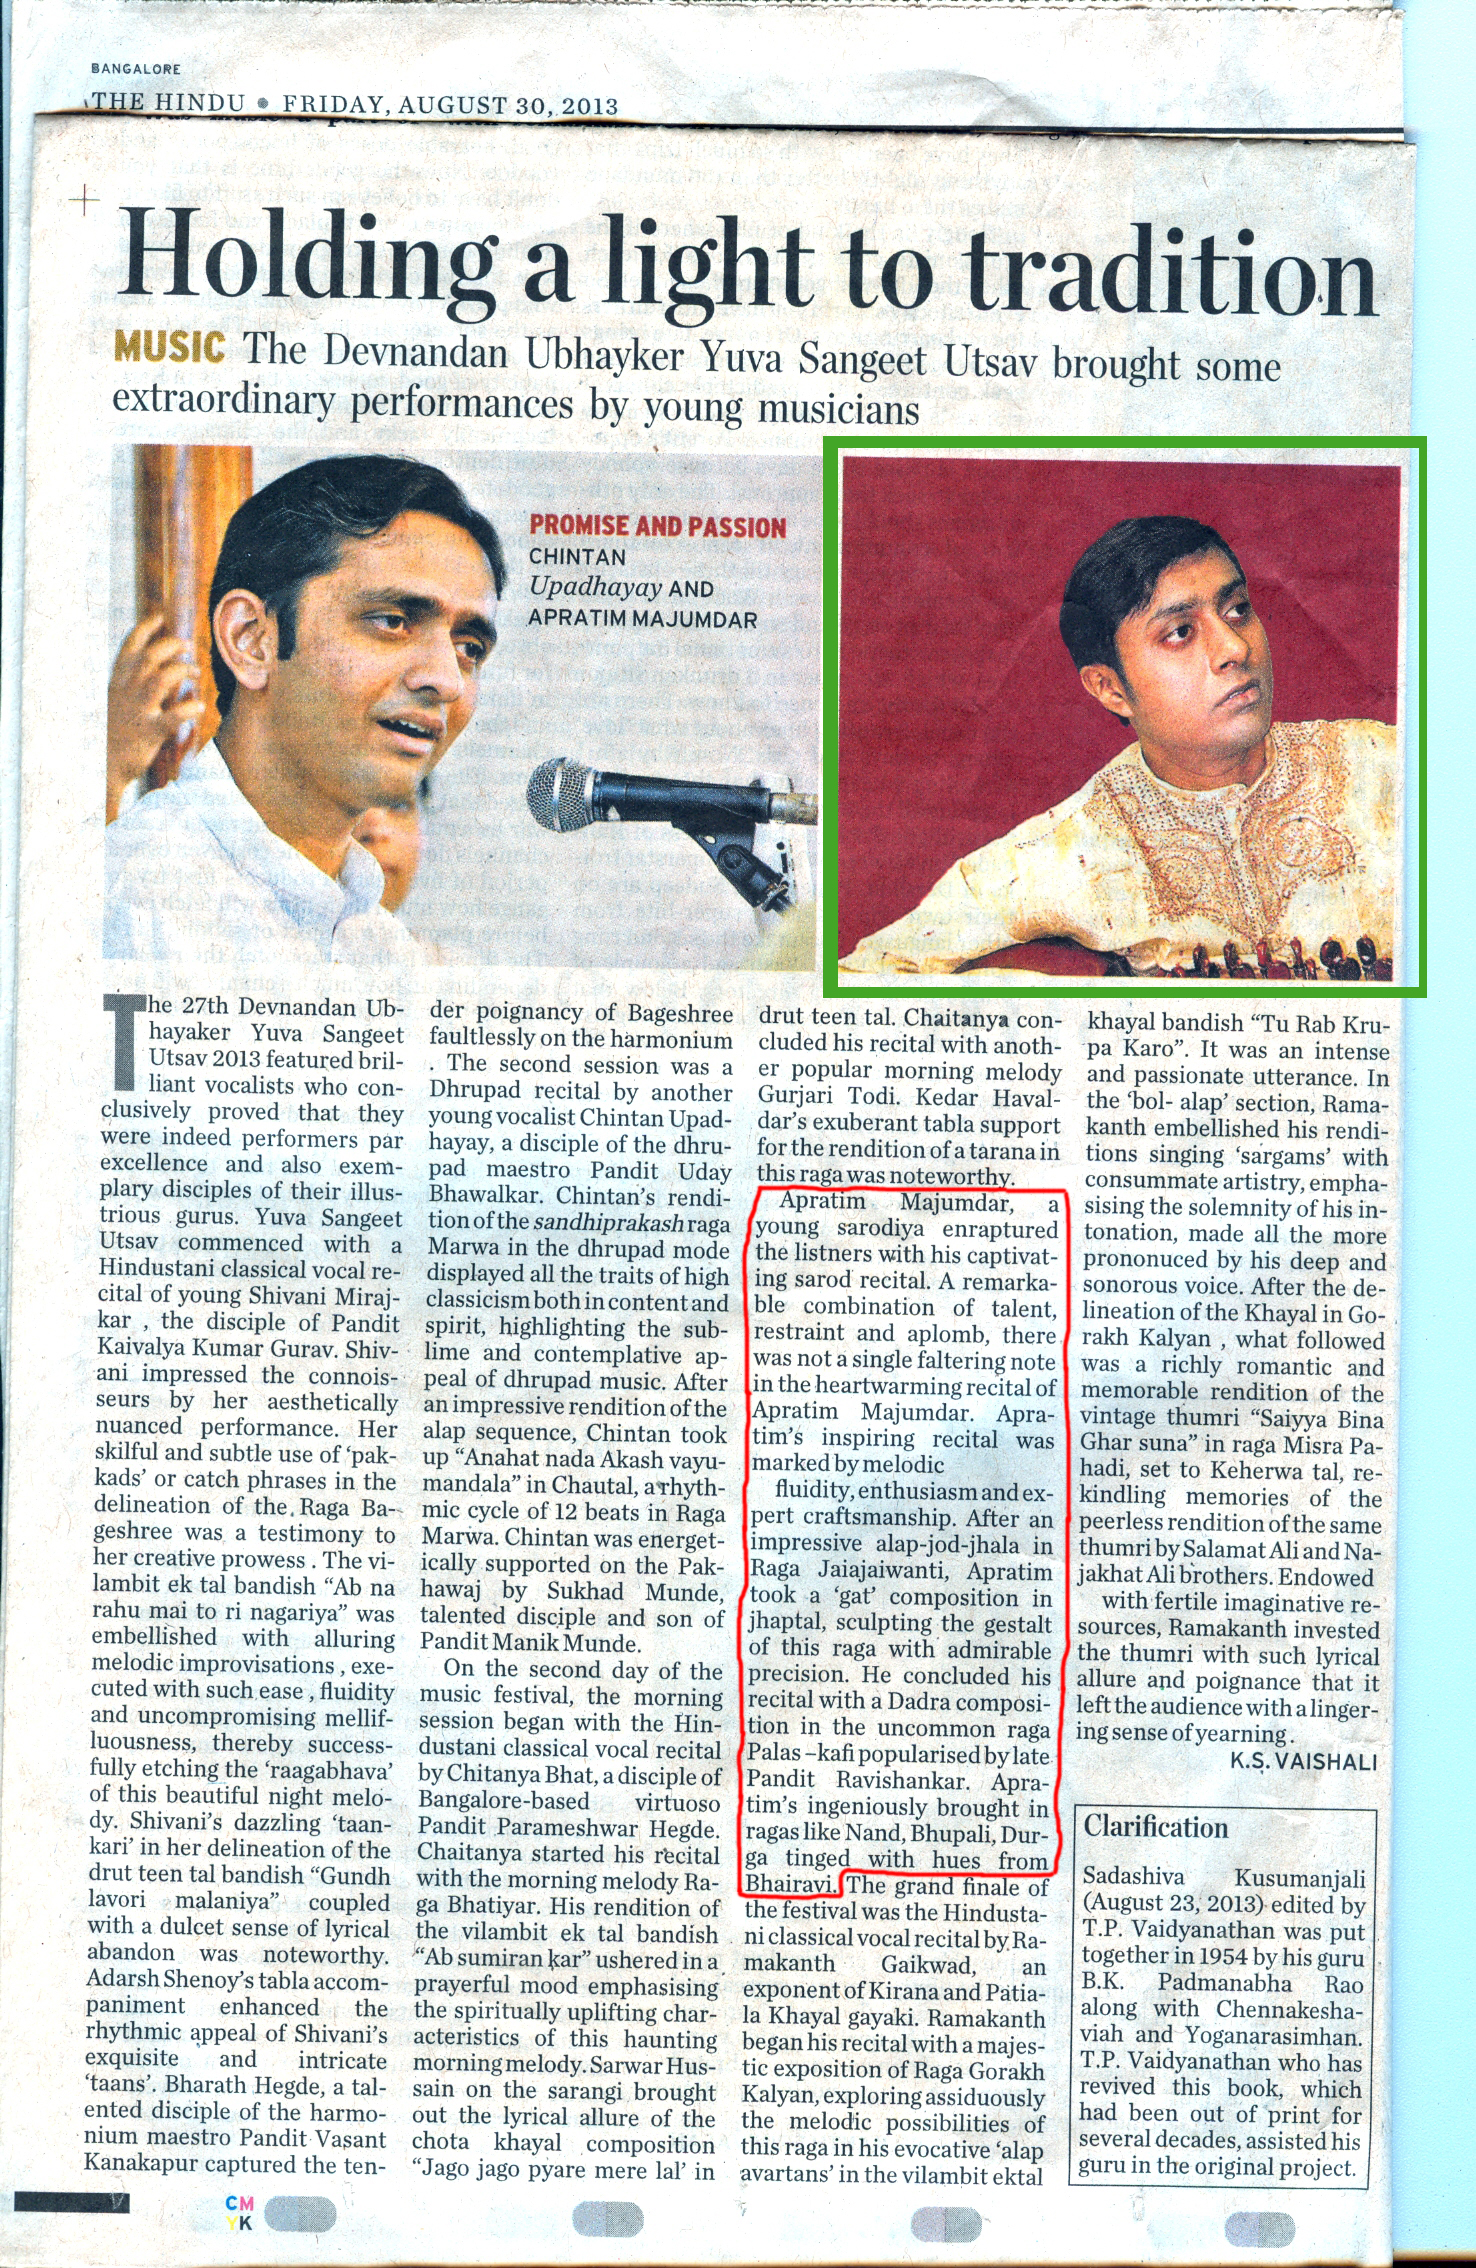 The HINDU on 30.8.2013 (print edition)